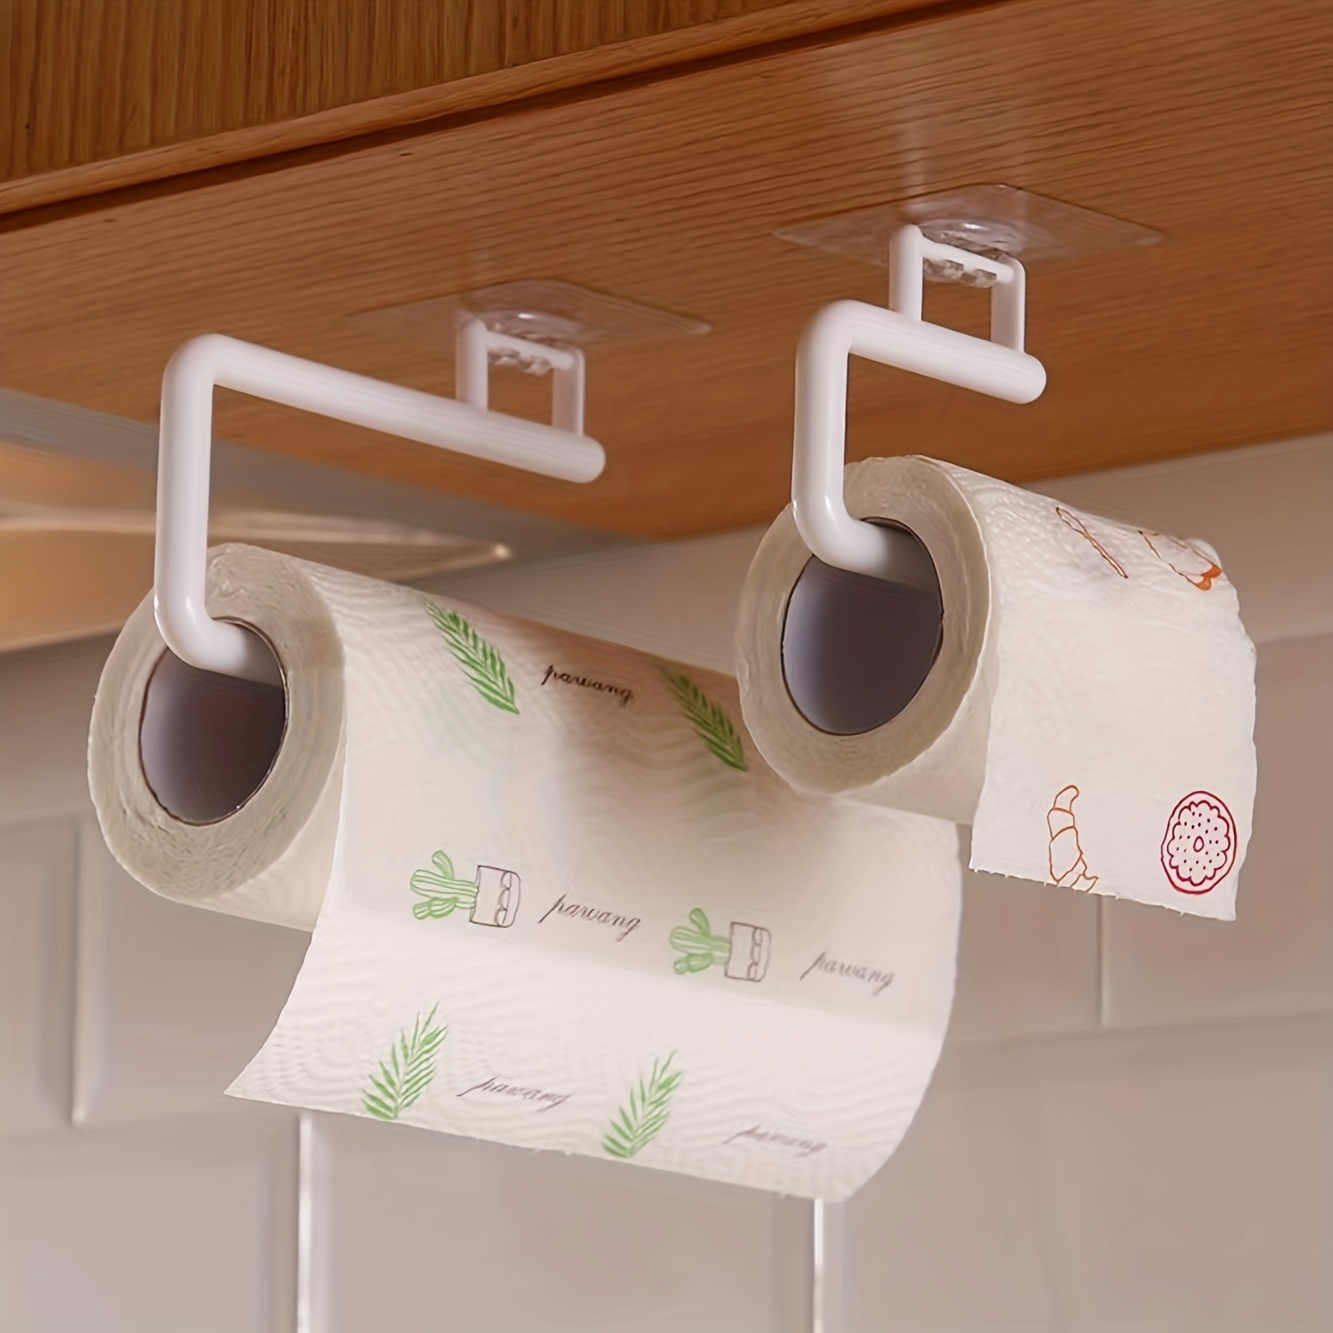 Adhesive Paper Towel Holder Under Cabinet, Black Paper Towel Roll